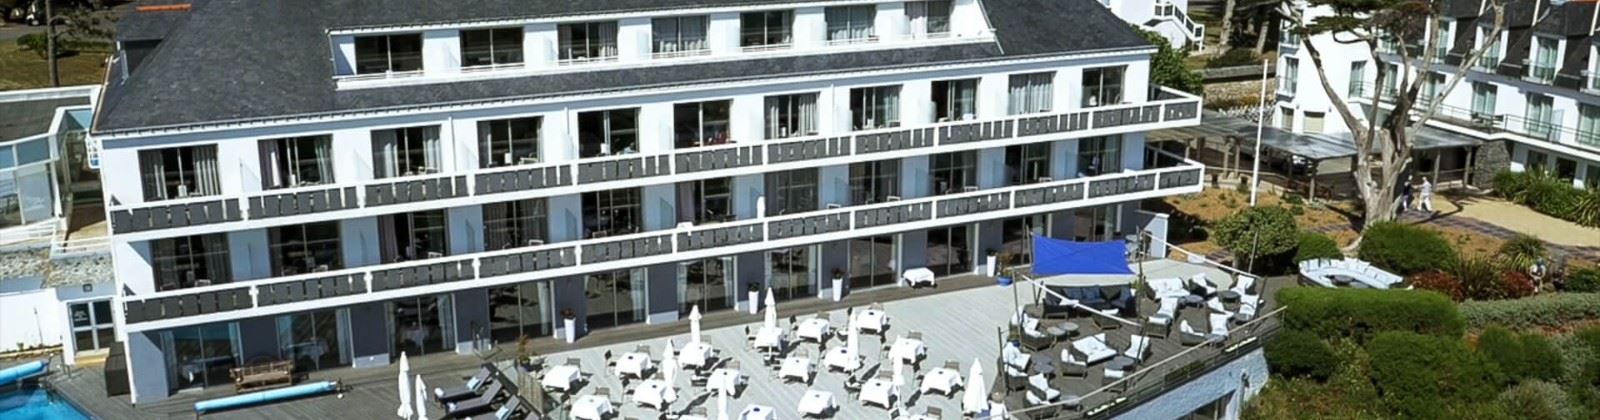 OLEVENE Image - castel-clara-olevene-hotel-restaurant-conference-booking-